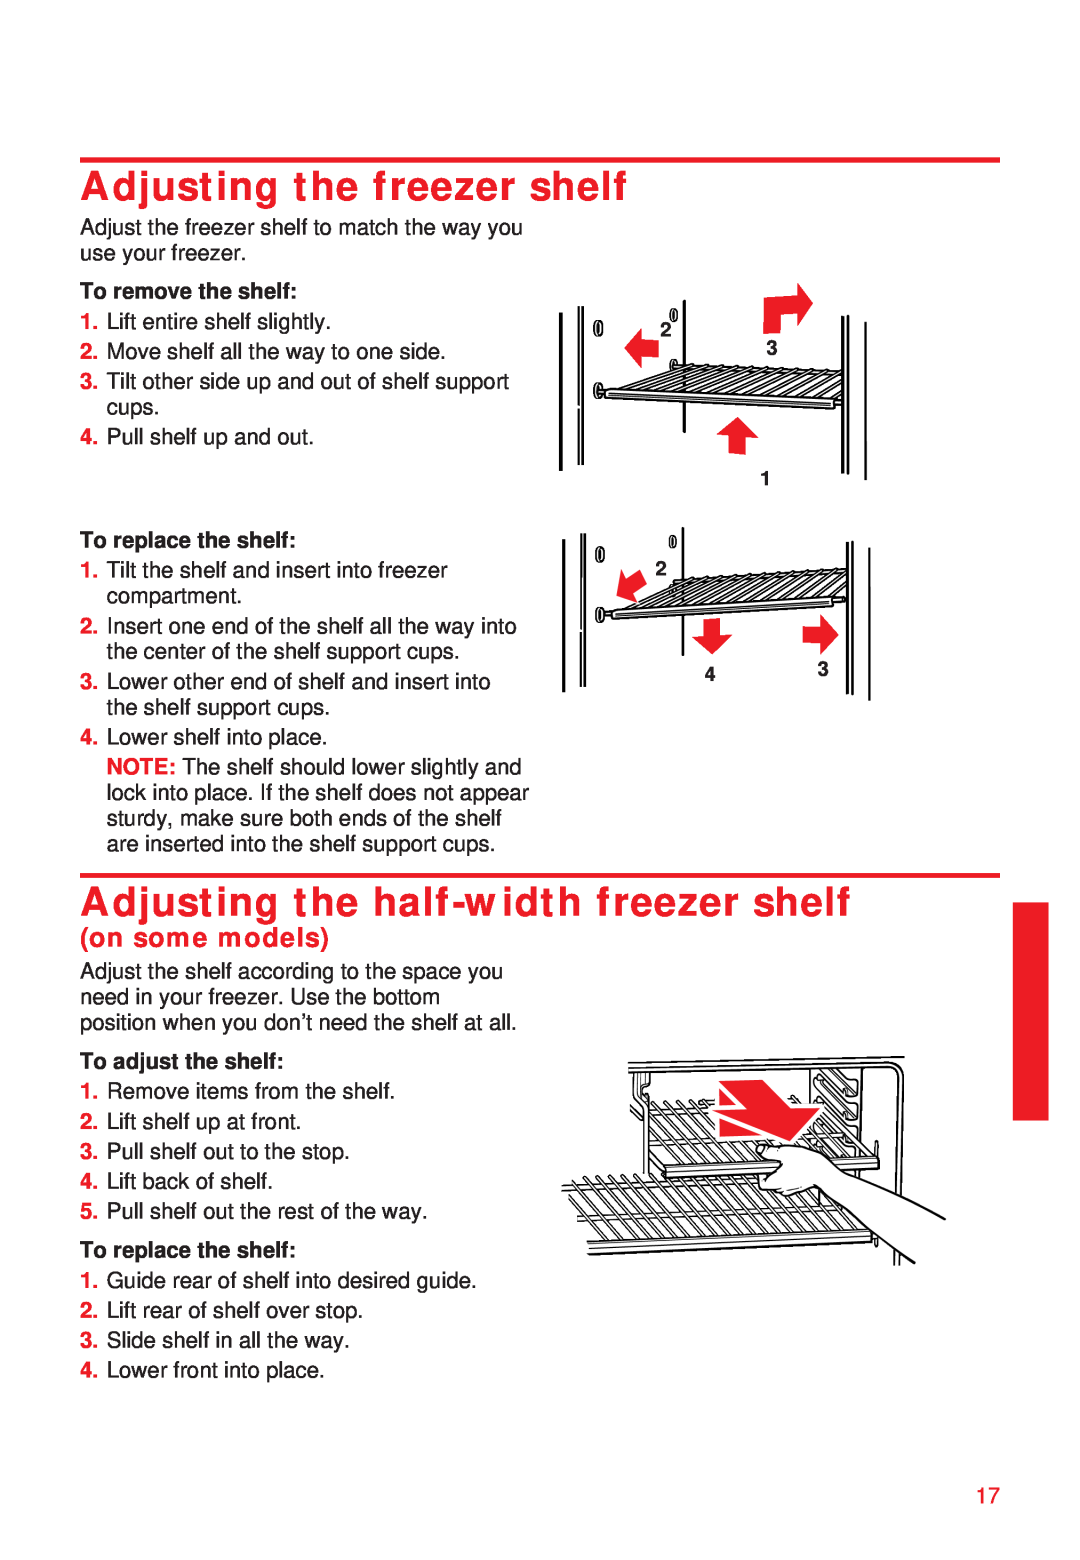 Whirlpool 2195258 manual Adjusting the freezer shelf, Adjusting the half-width freezer shelf, To replace the shelf 